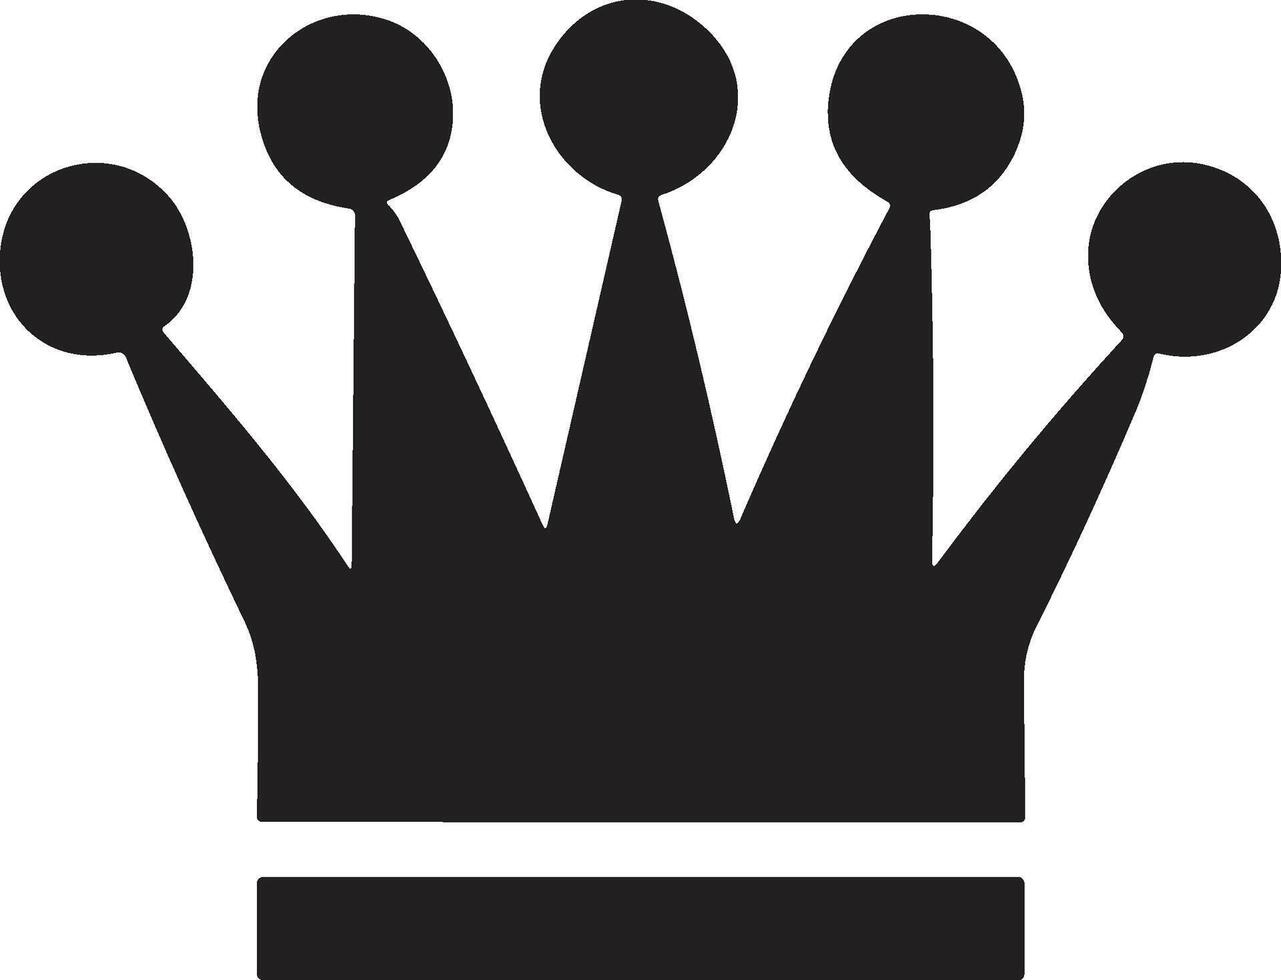 kroon logo in modern minimaal stijl vector